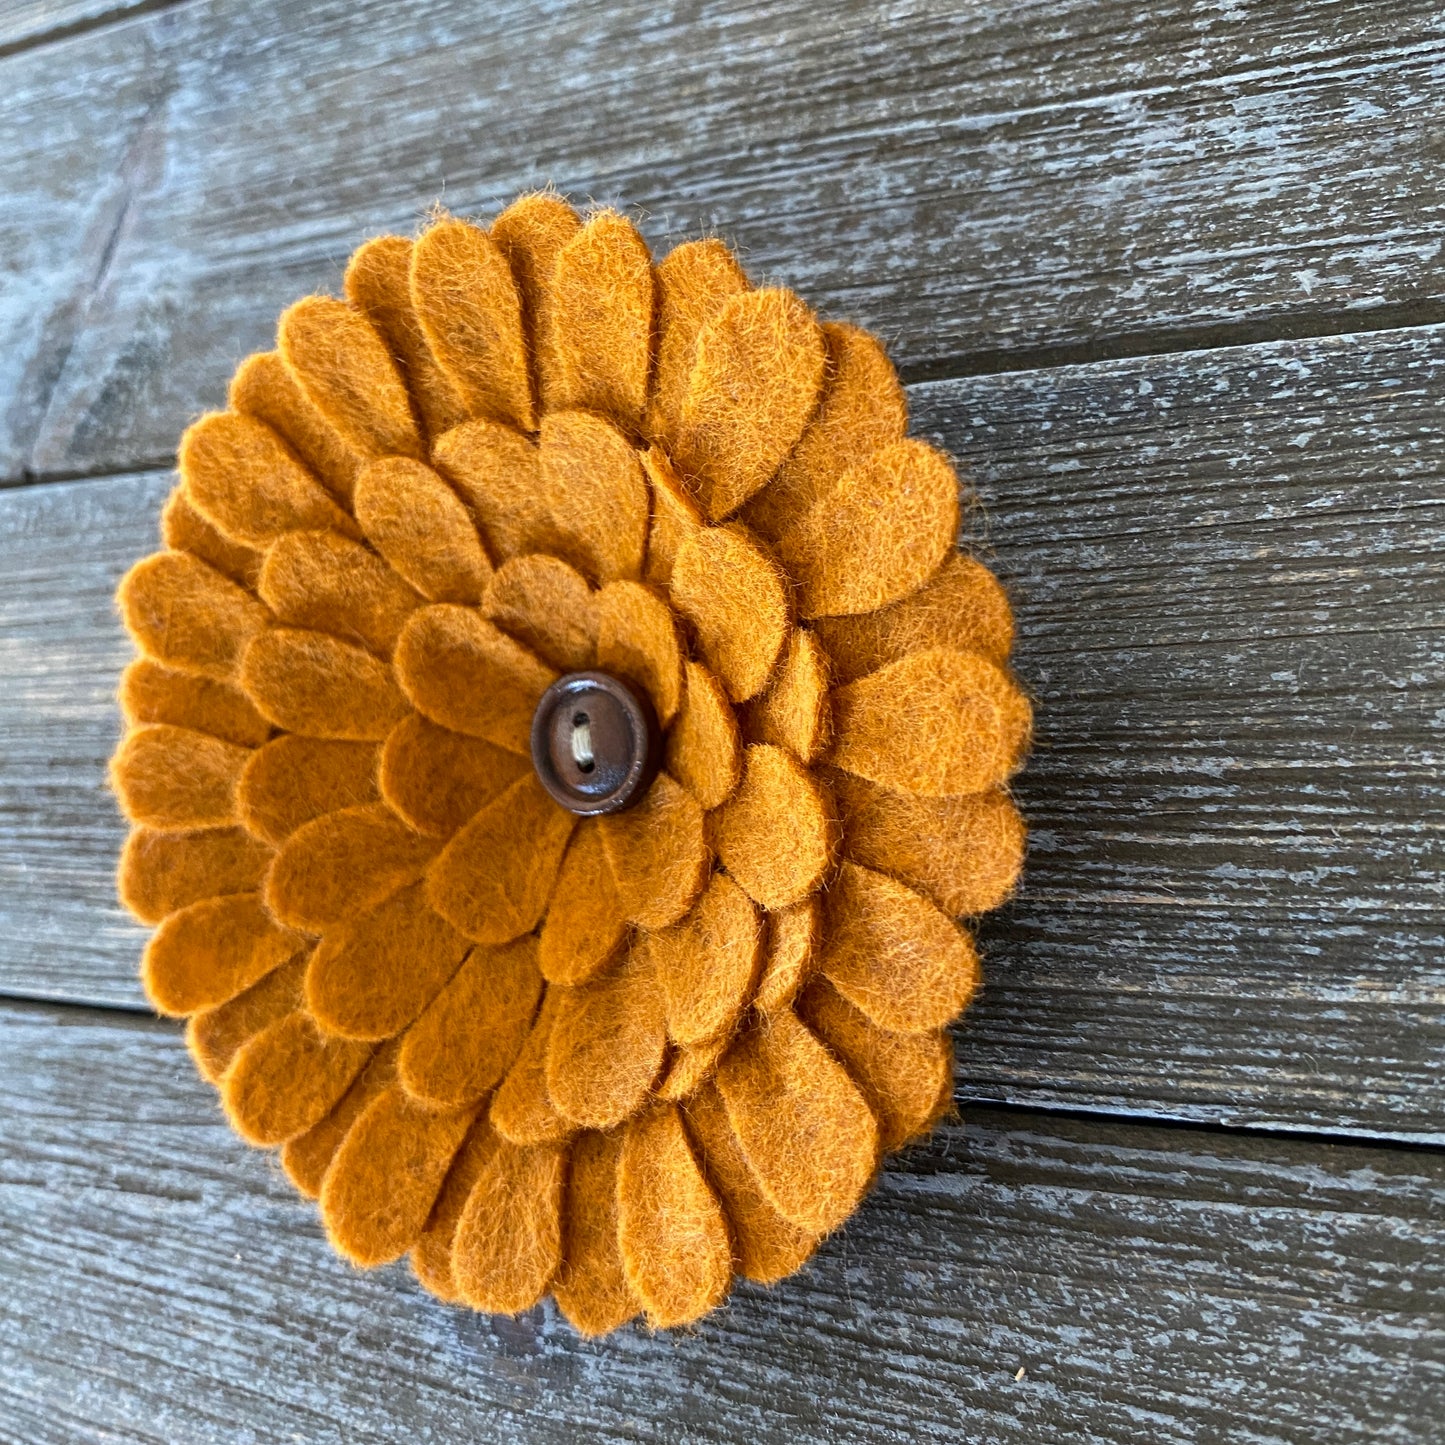 Felt Flower Embellishments for Crafts - Orange Flower with Wood Button - Large